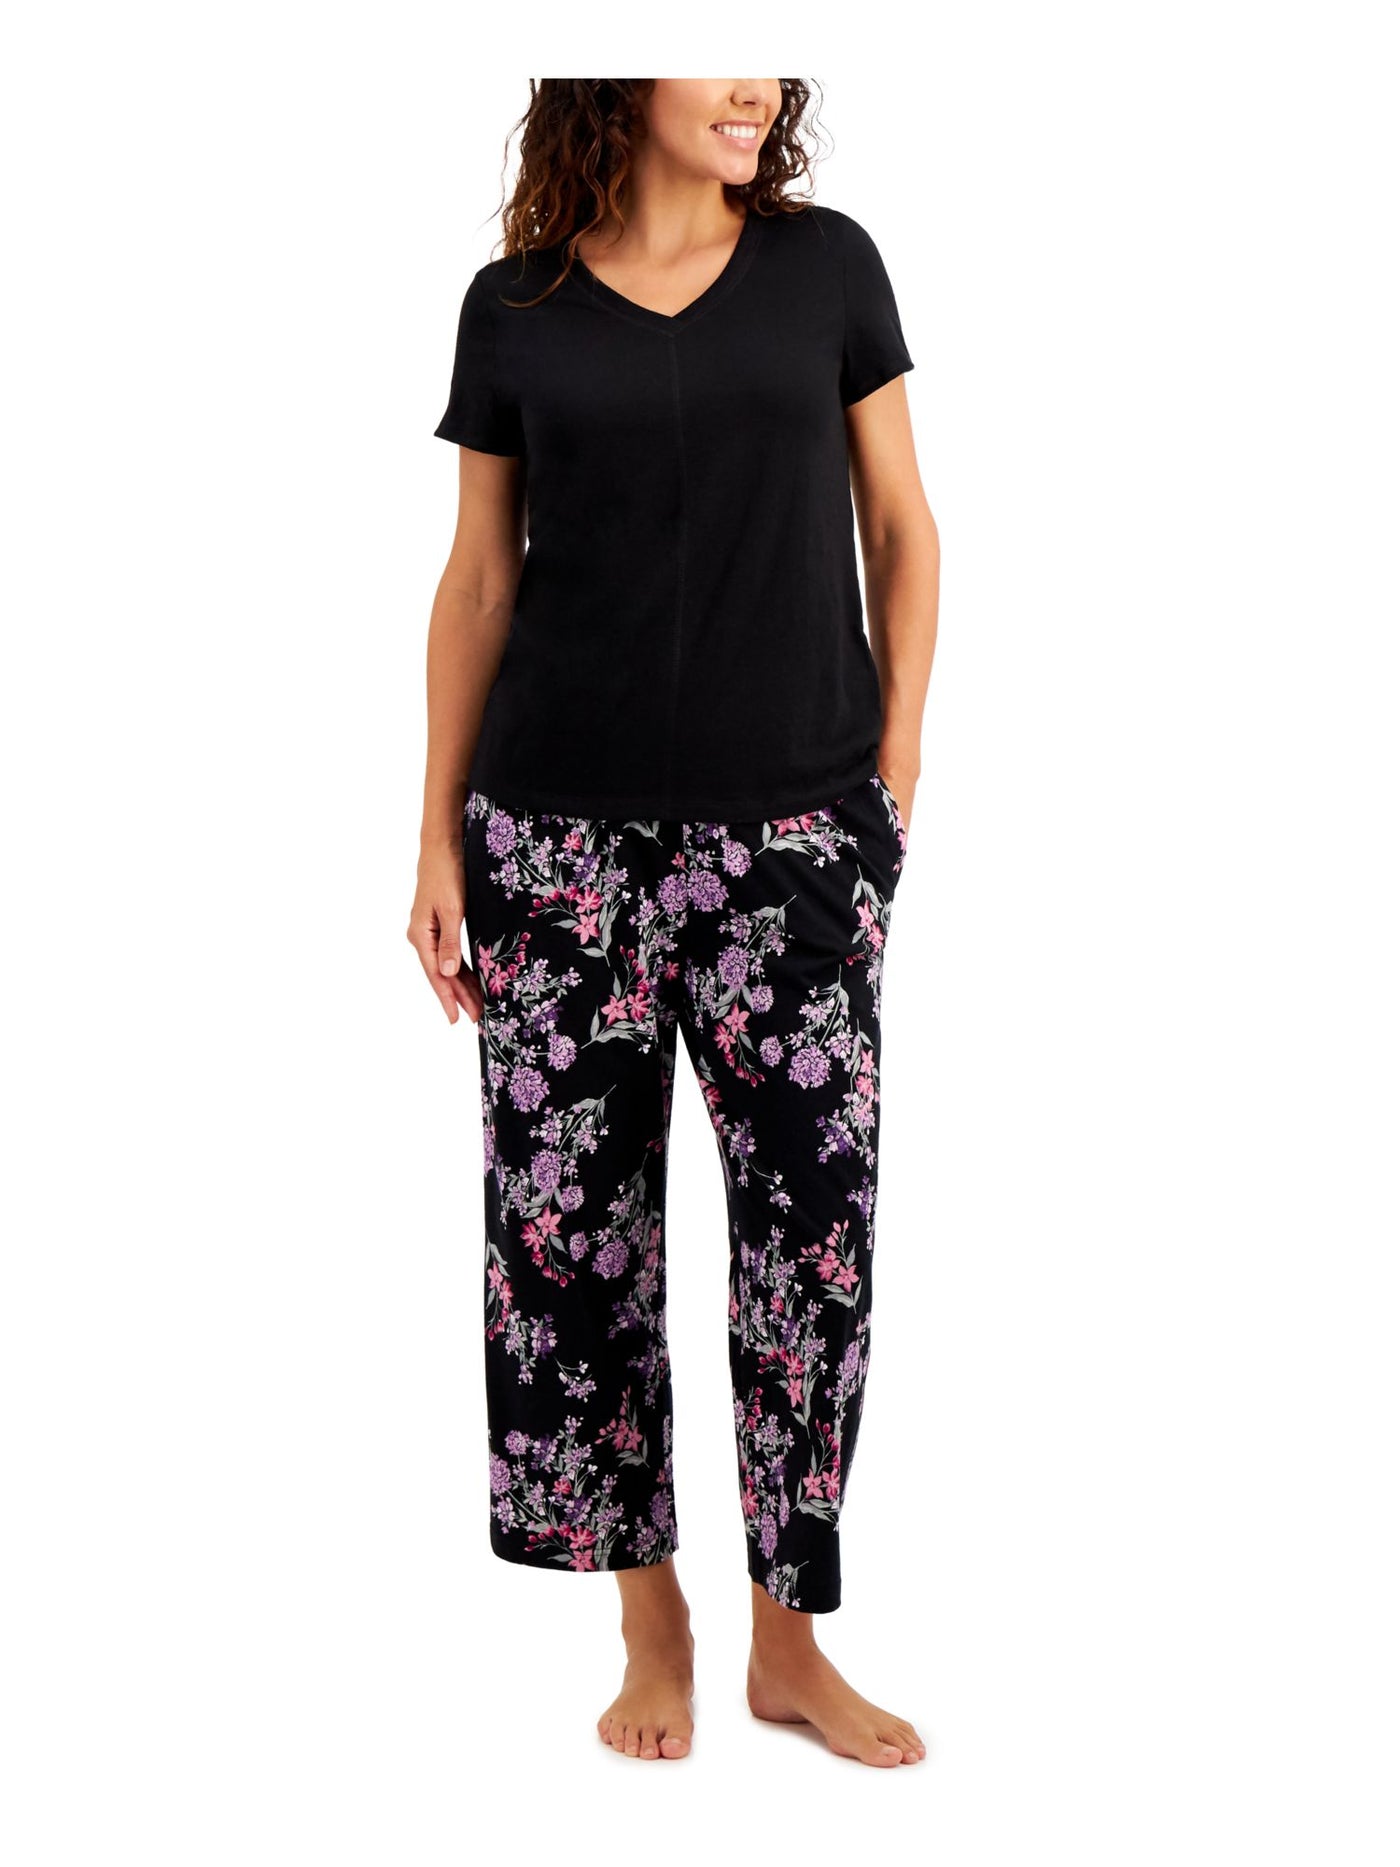 CHARTER CLUB Intimates Black Jersey Pullover  Front Seam Sleep Shirt Pajama Top XS